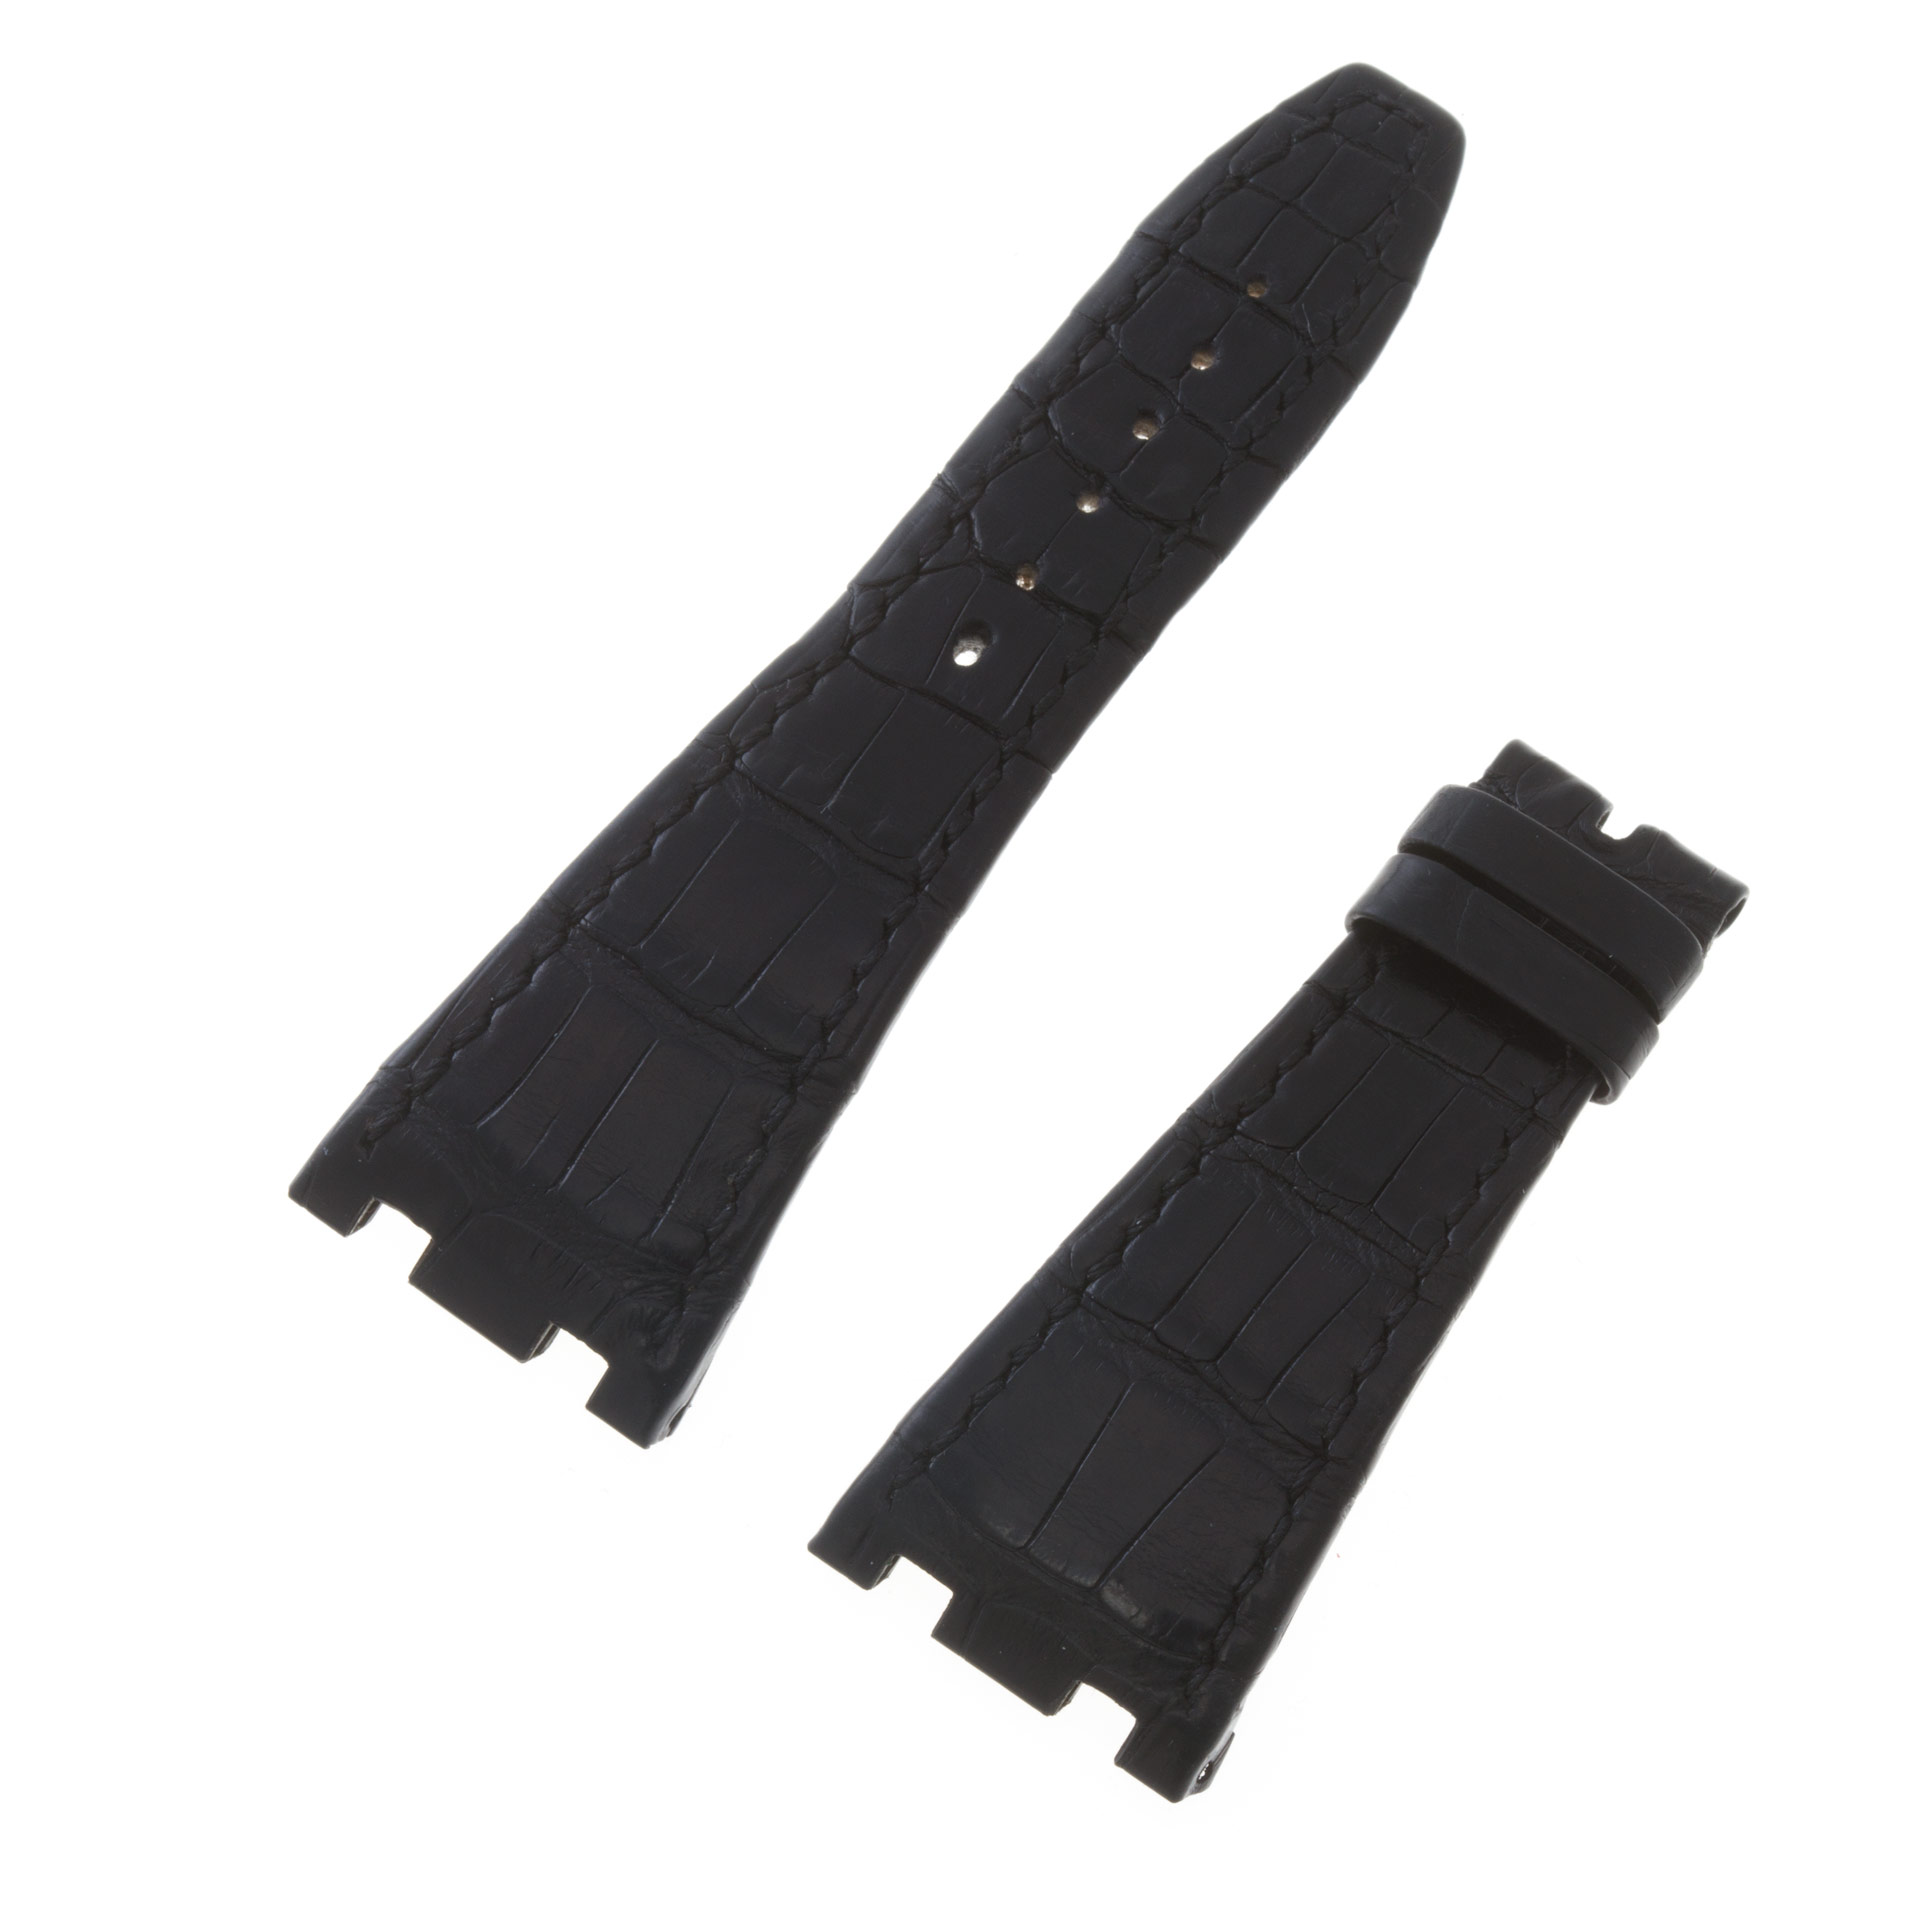 Pre- owned Audemars Piguet black alligator strap in good condition 28mm x 18mm